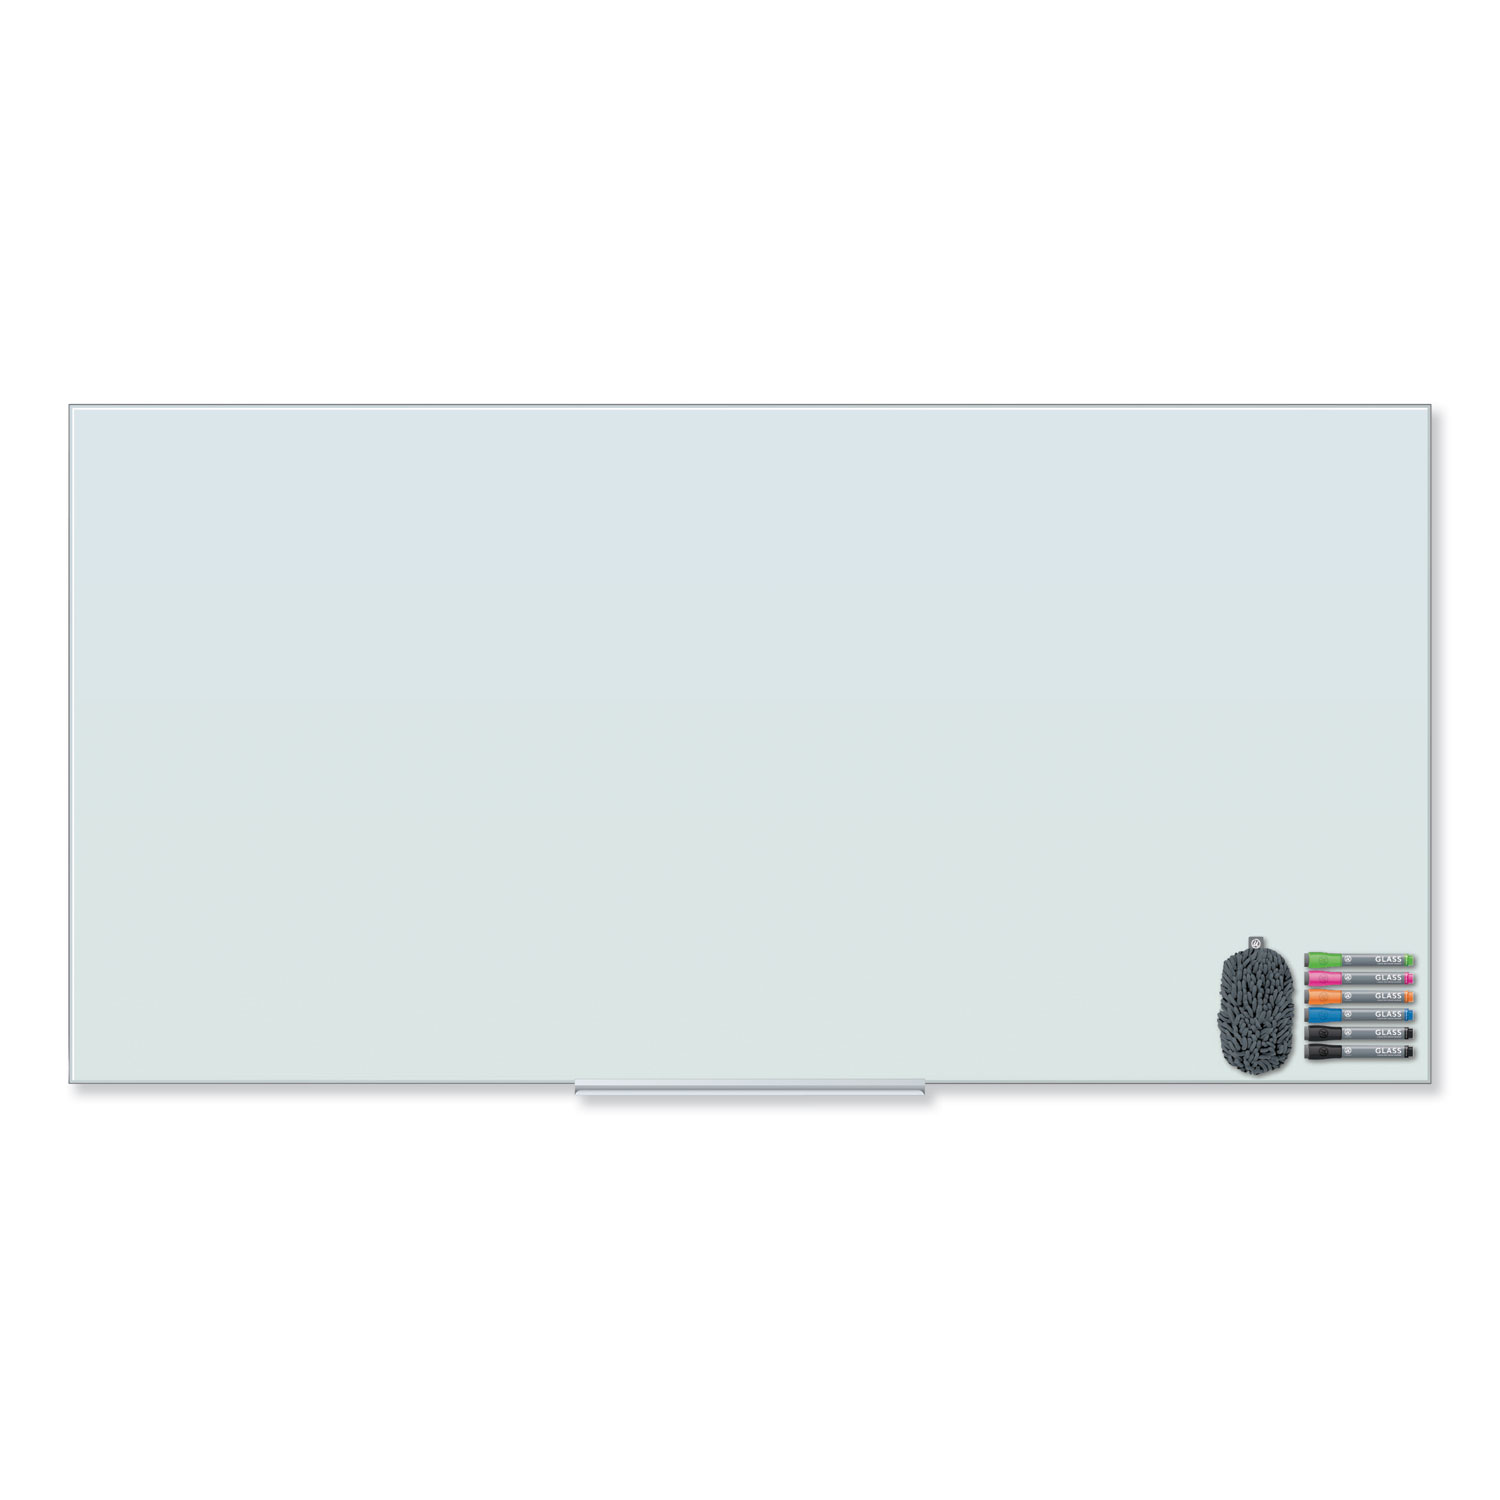  U Brands 3978U00-01 Floating Glass Dry Erase Board, 72 x 36, White (UBR3978U0001) 